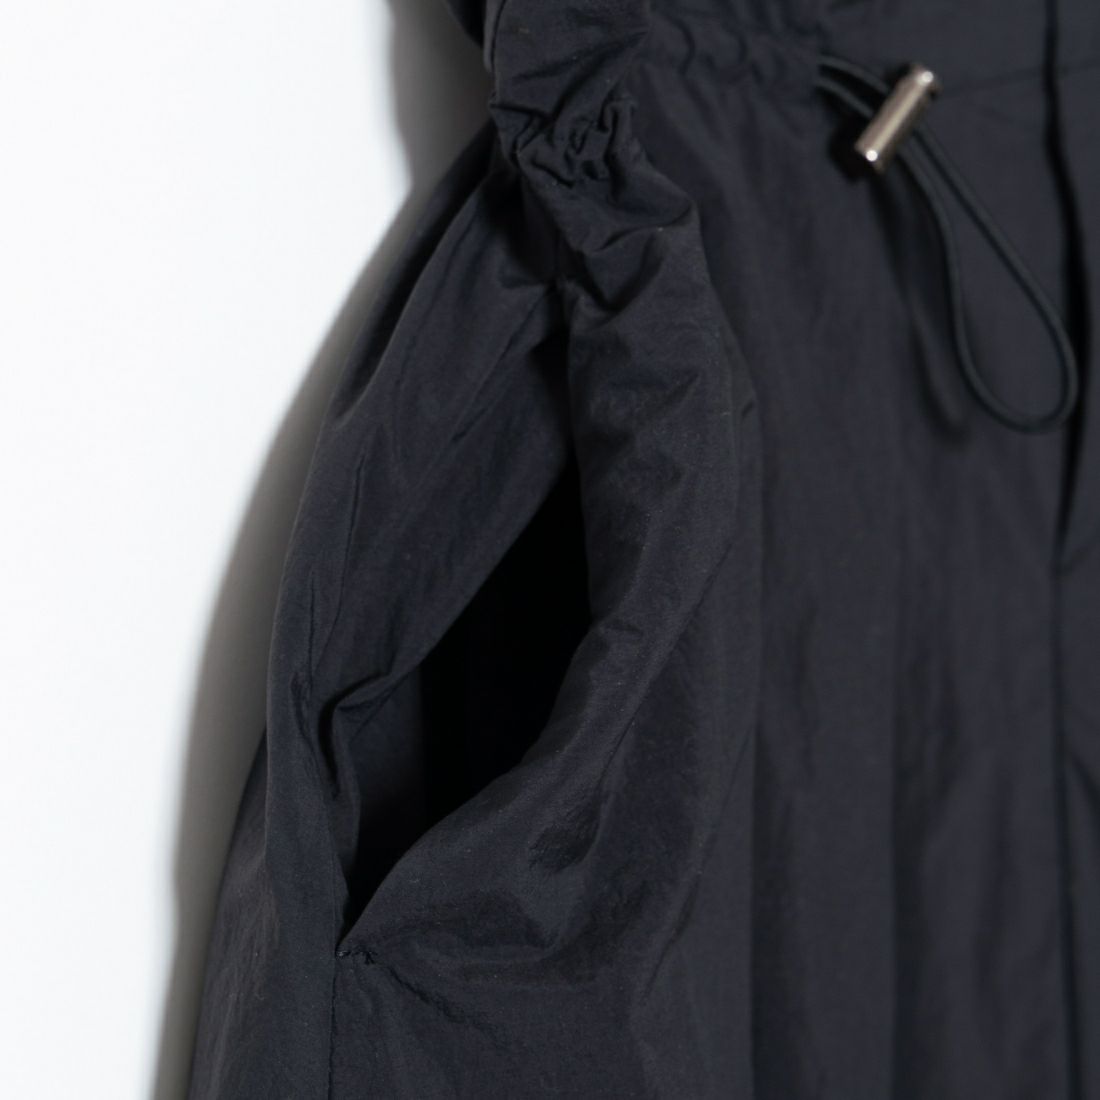 Jeans Factory Clothes [ジーンズファクトリークローズ] ドローコードギャザースカート [21241062] 004 ﾌﾞﾗｯｸ